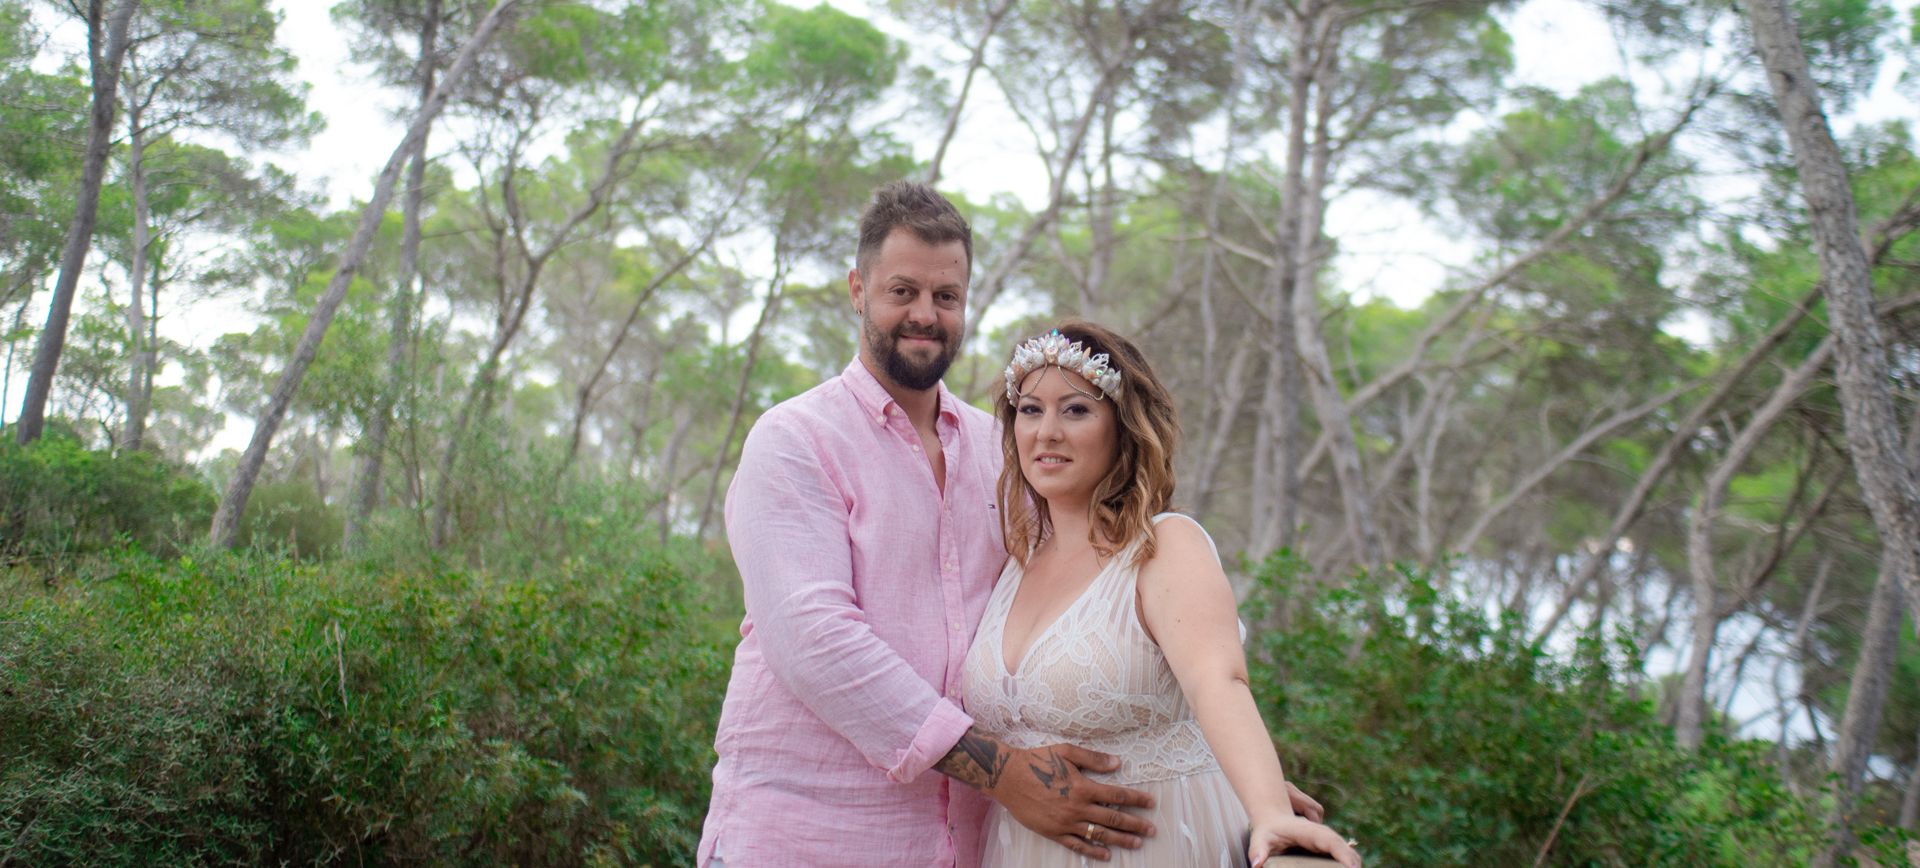 santanyi elopement wedding in Mallorca - bride and groom in natural parc mondrago